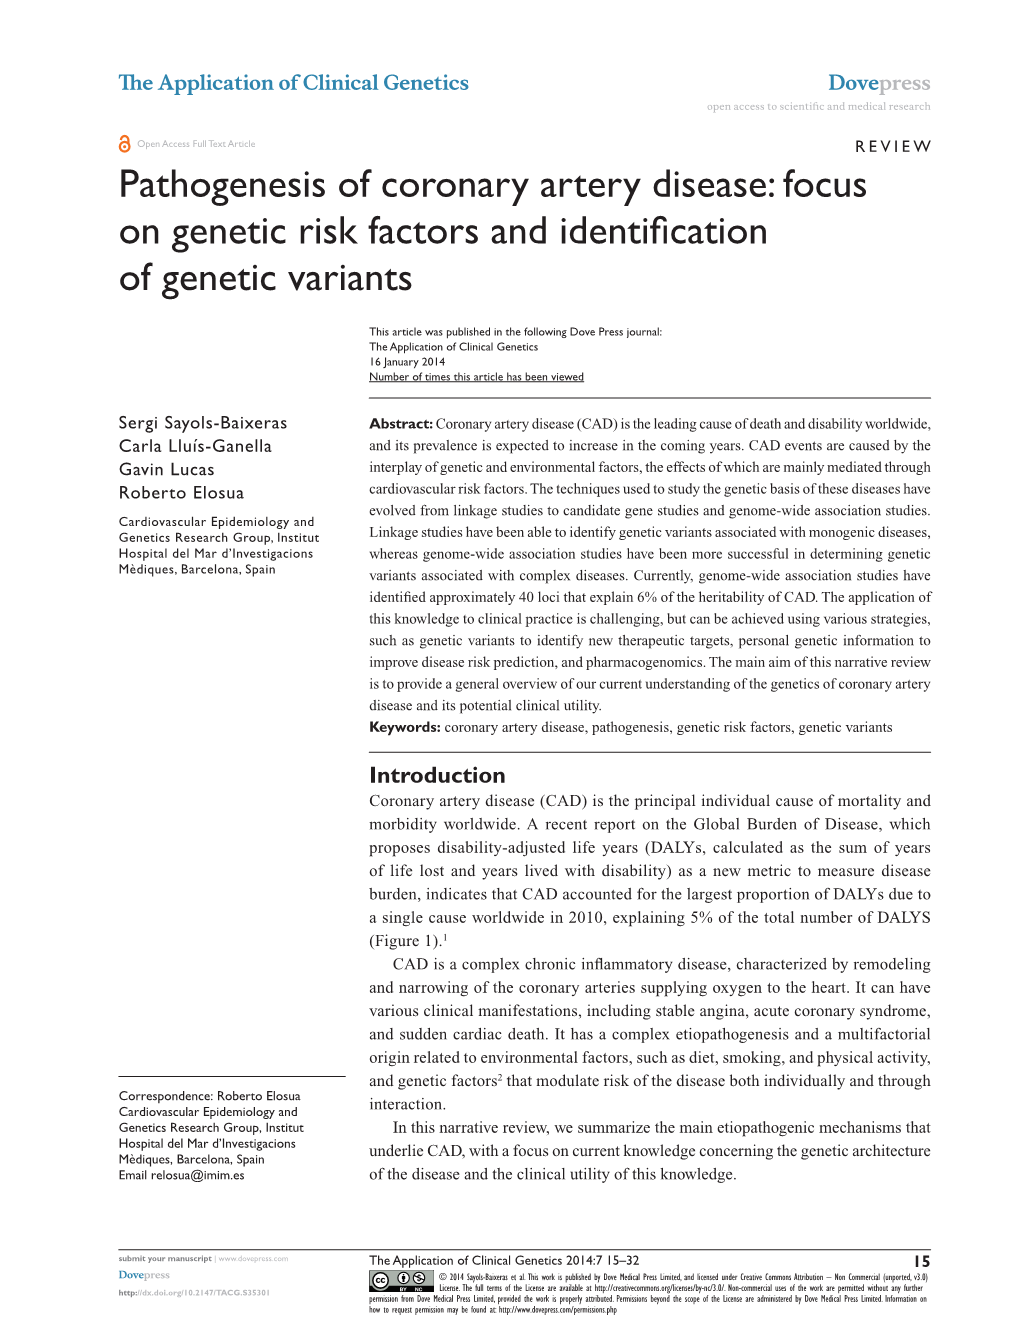 Pathogenesis of Coronary Artery Disease: Focus on Genetic Risk Factors and Identification of Genetic Variants